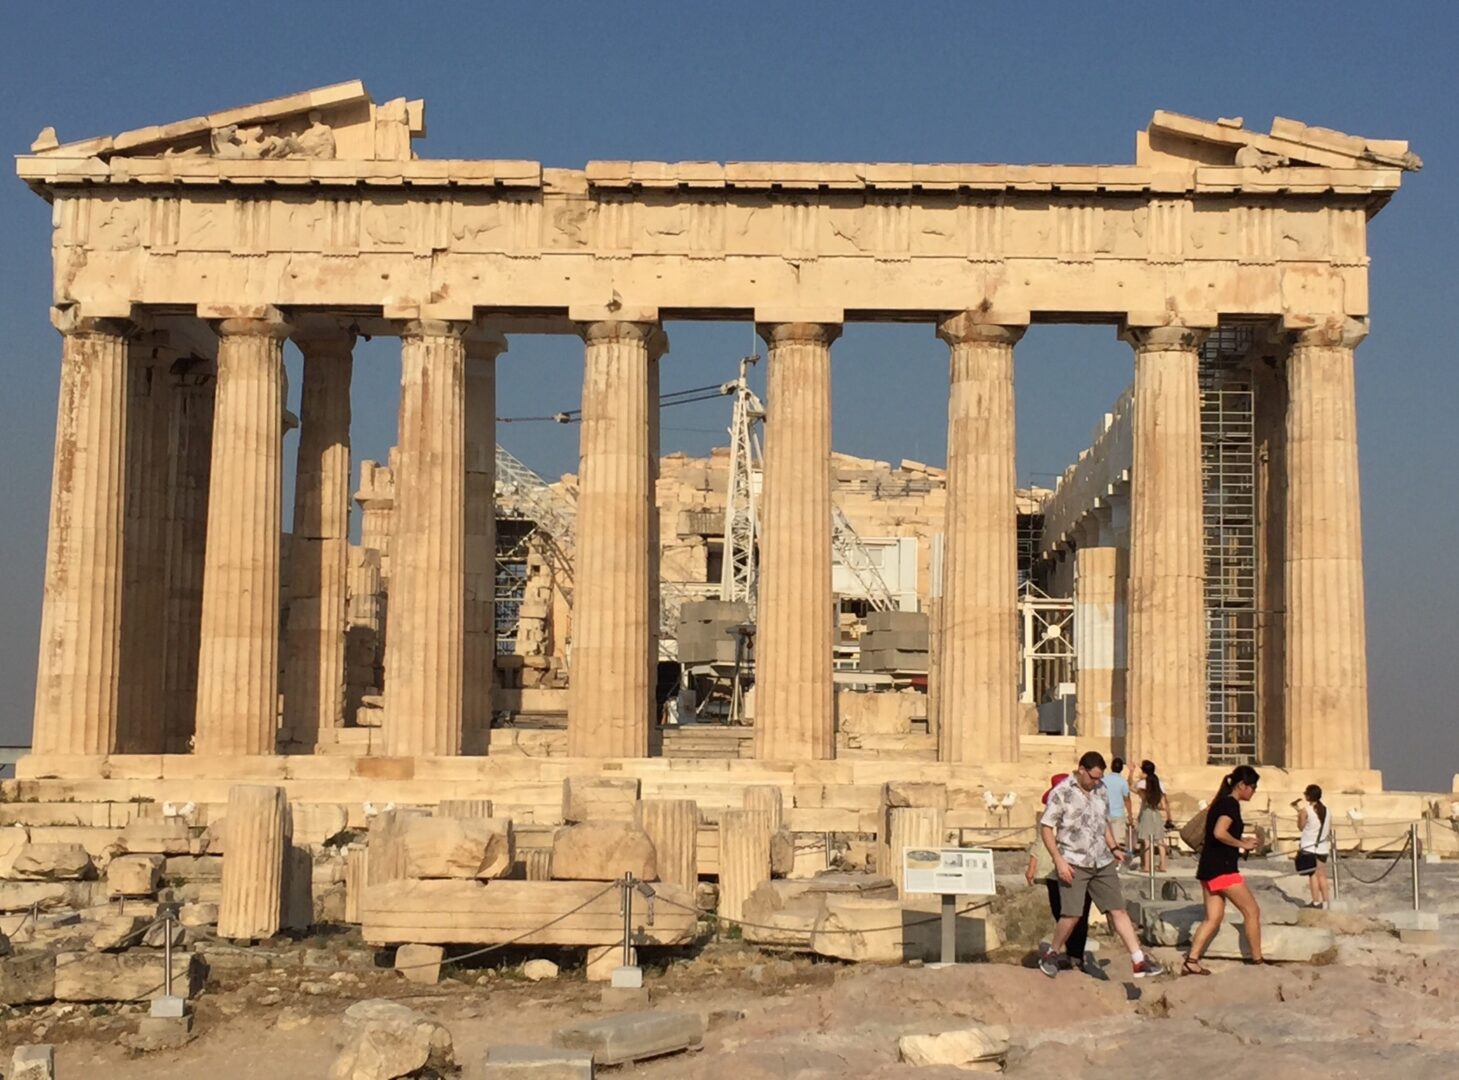 The parthenon in acropolis, greece.